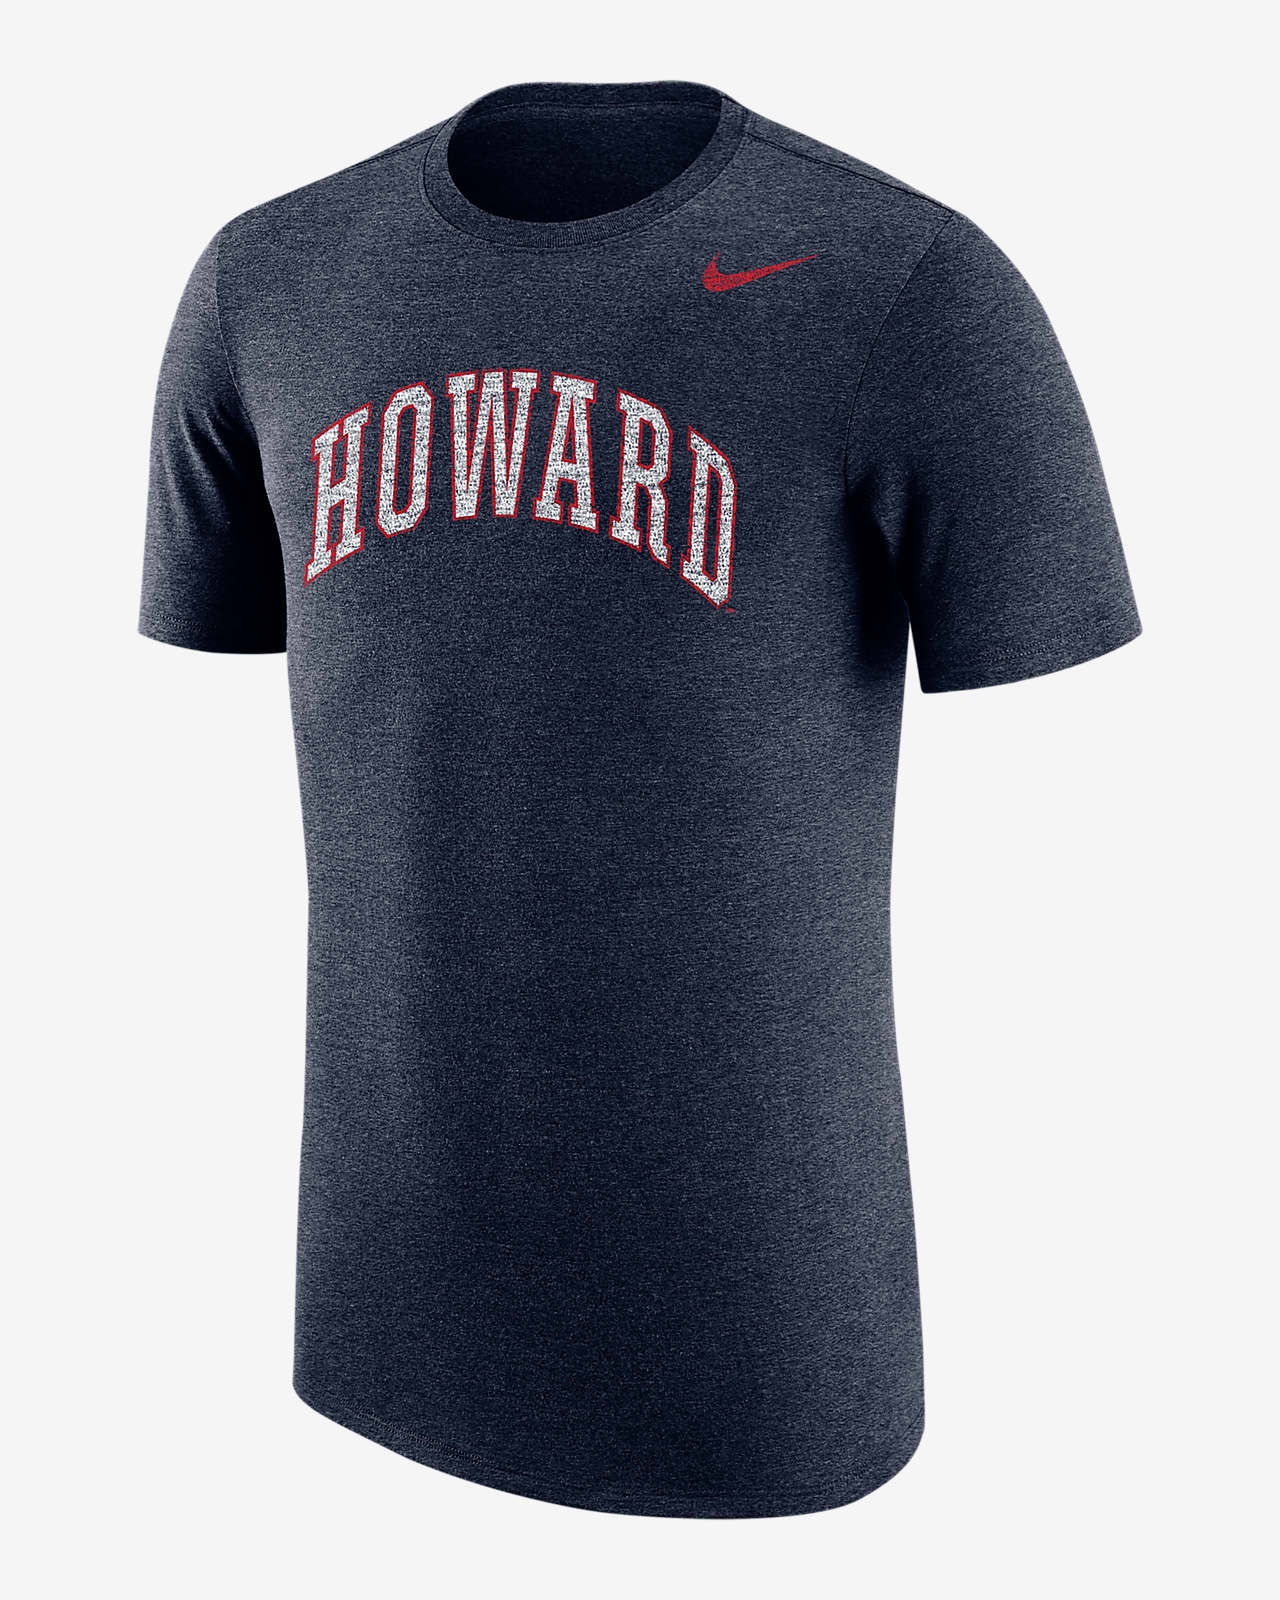 Nike College (Howard) Men's T-Shirt